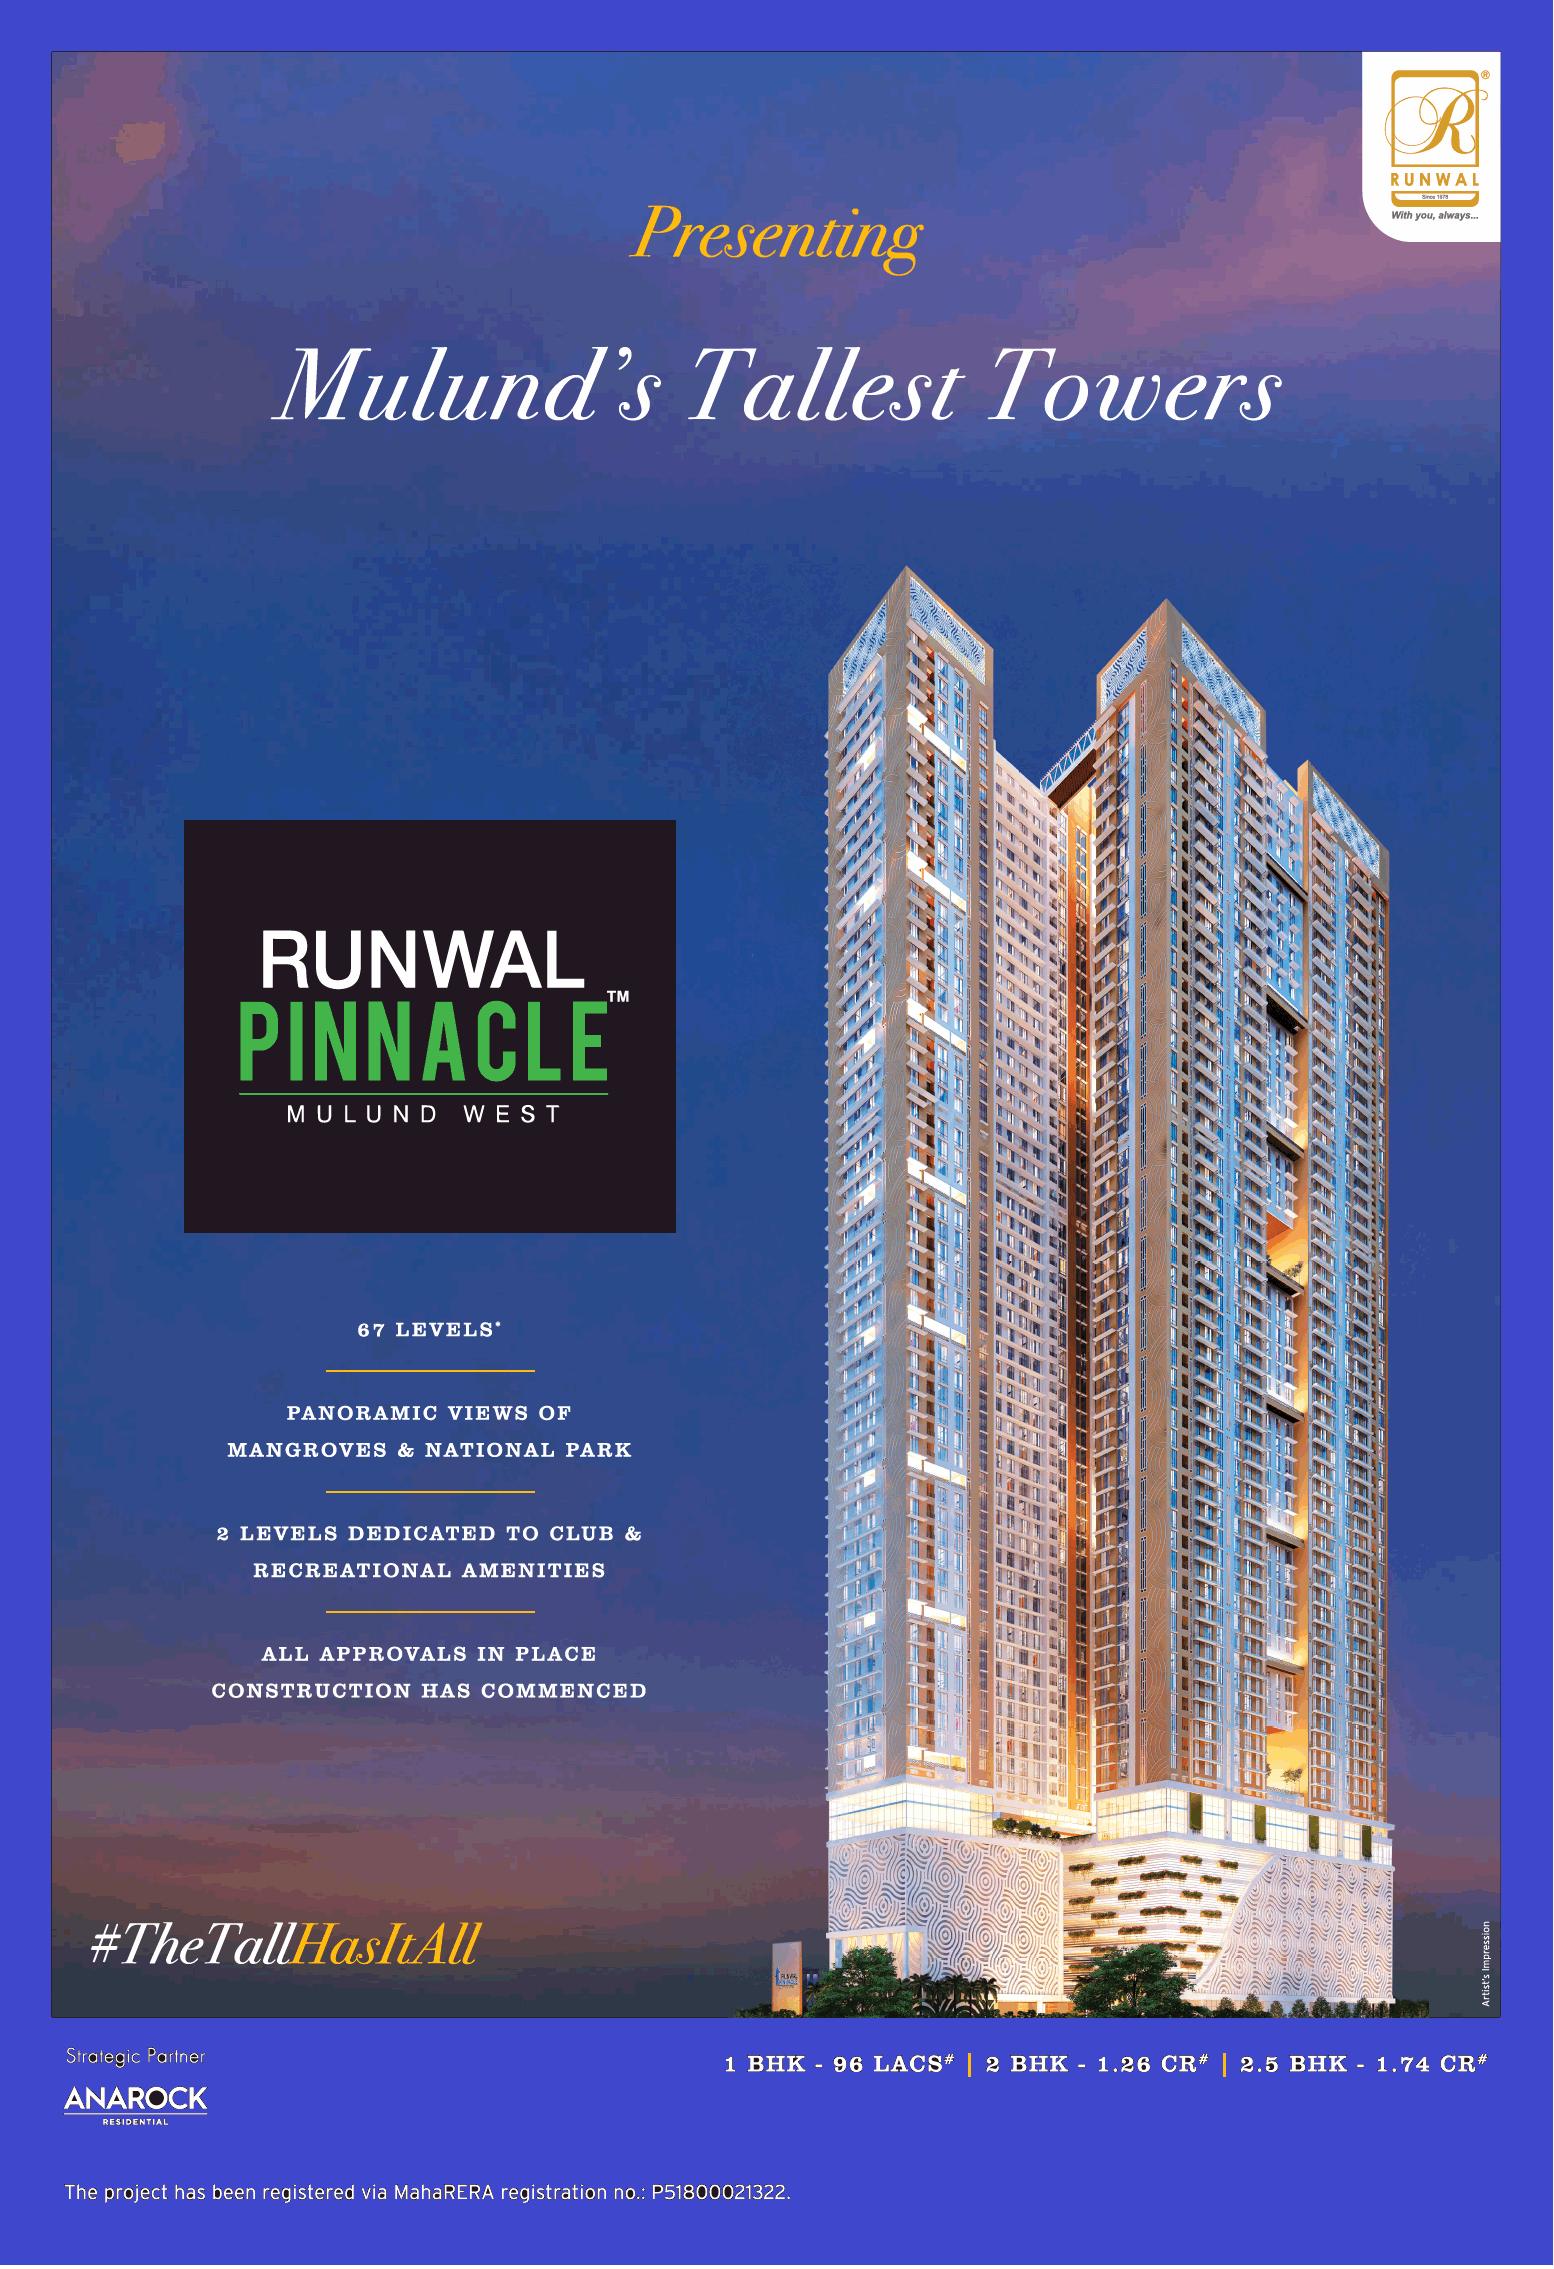 Presenting mulund's tallest towers at Runwal Pinnacle, Mumbai